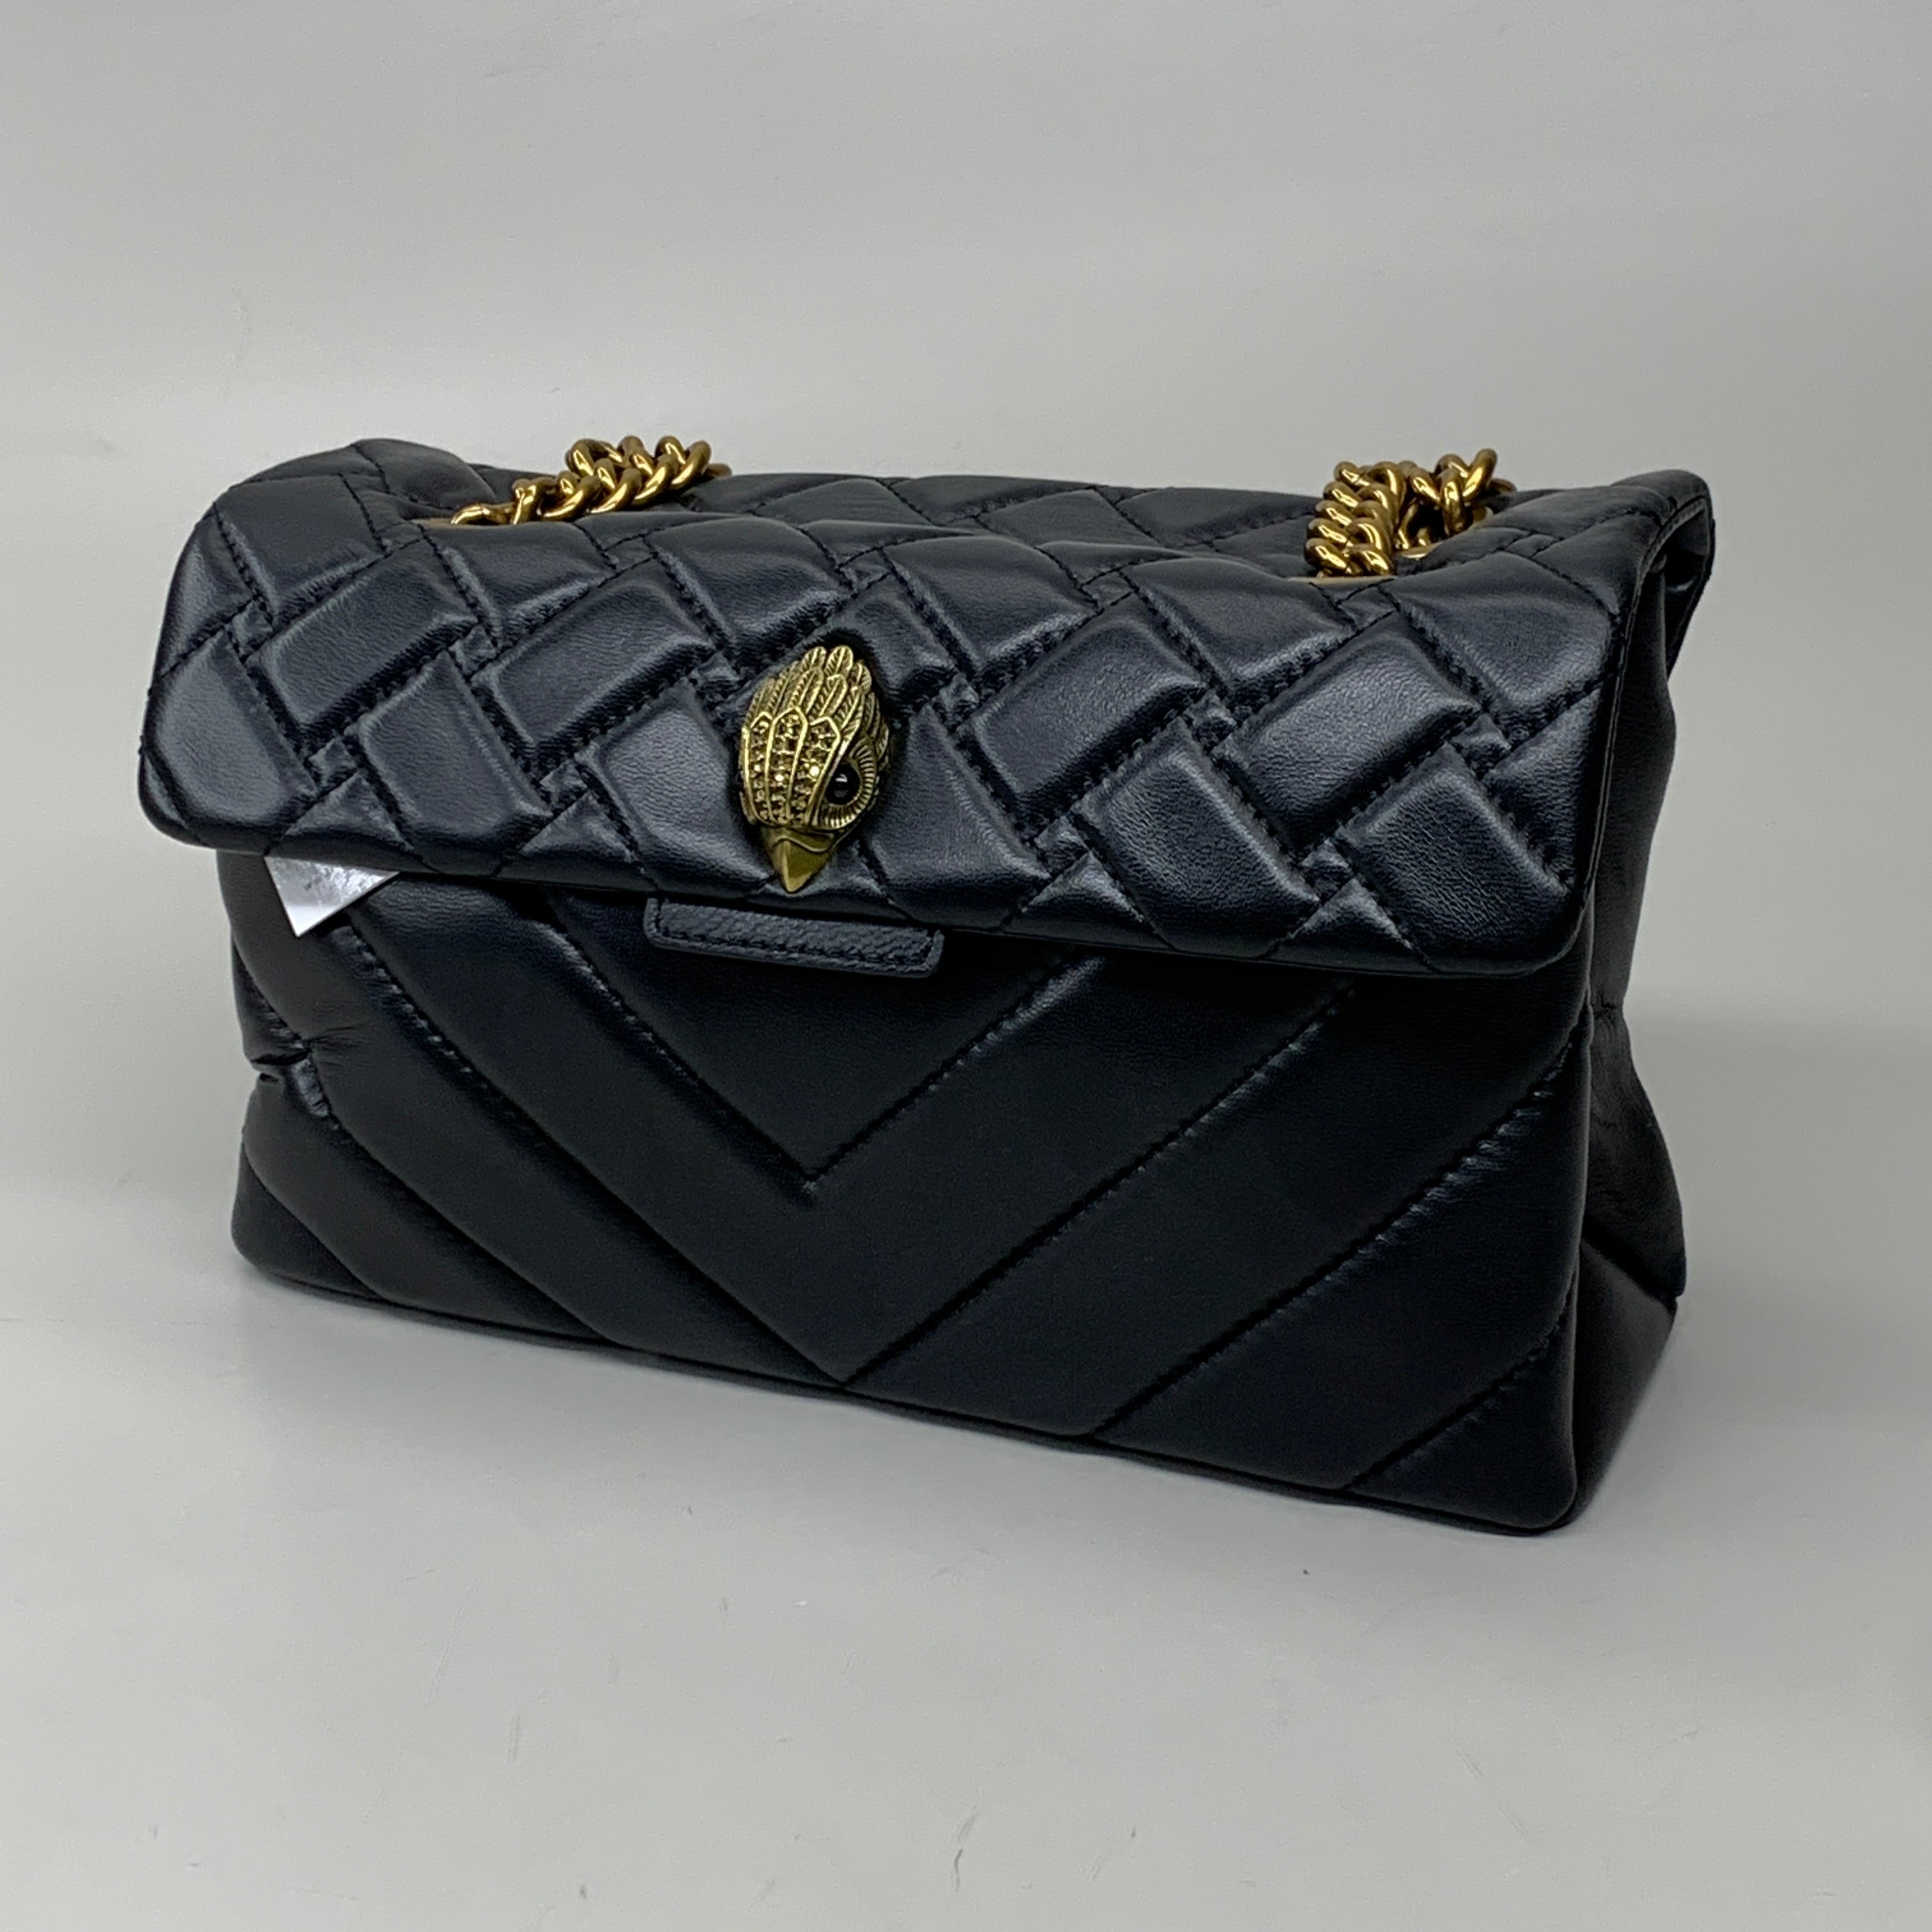 KURT GEIGER Kensington Leather X Bag 10.5